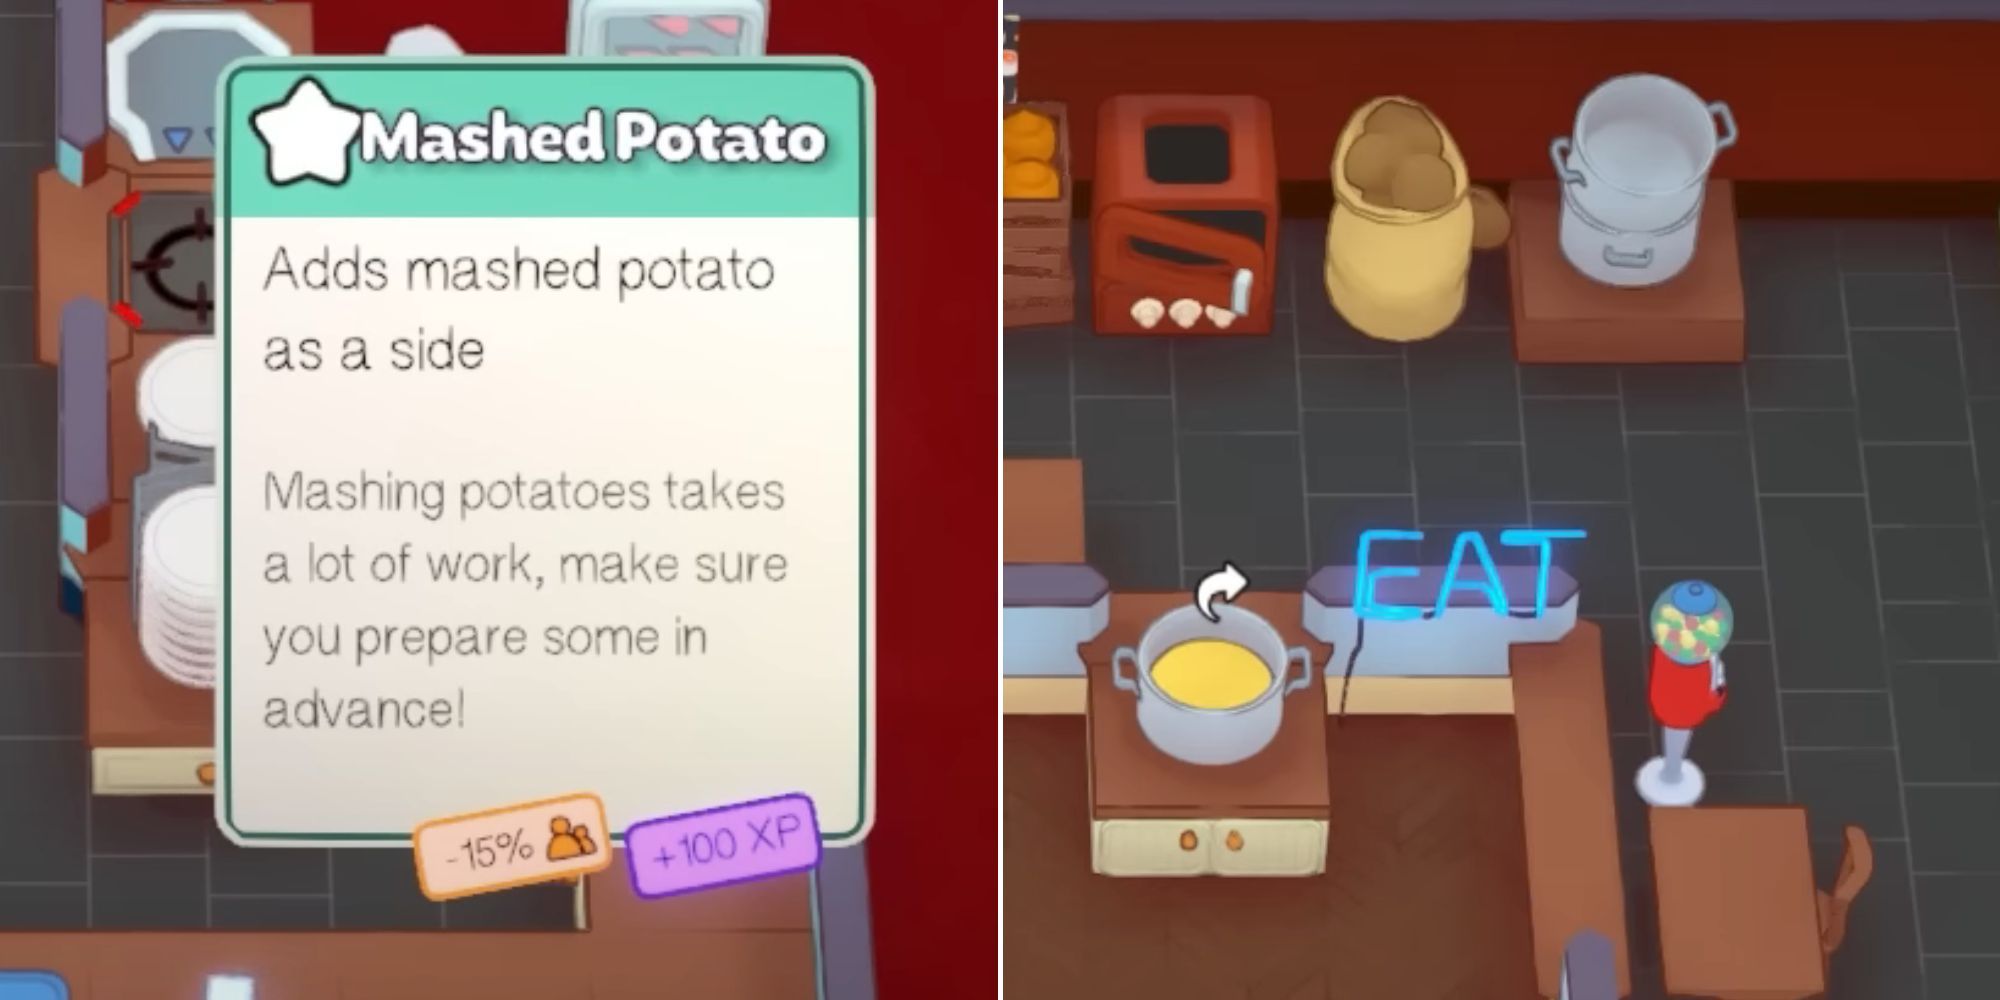 PlateUp - Mashed Potato Card - Mashed Potato Servings